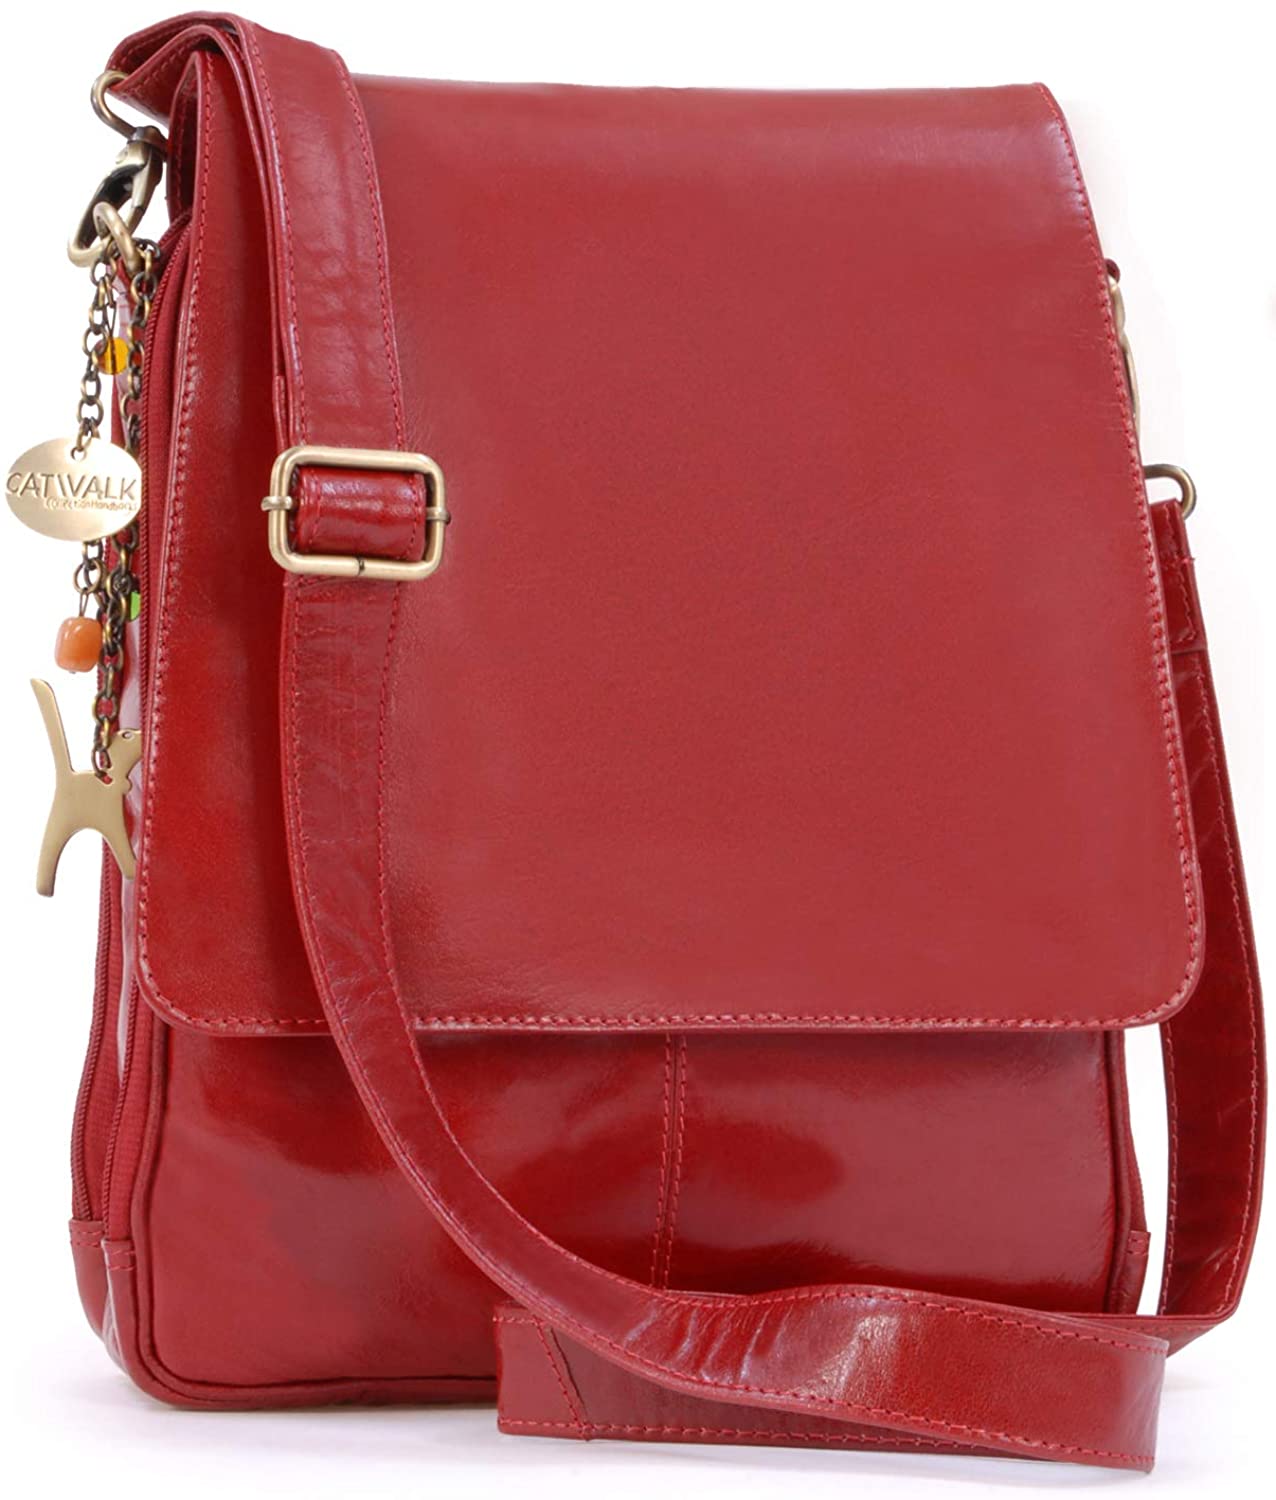 GROSVENOR Ladies Leather Messenger/Shoulder Bag Detachable Strap Womens A4 Work Bag Catwalk Collection Handbags